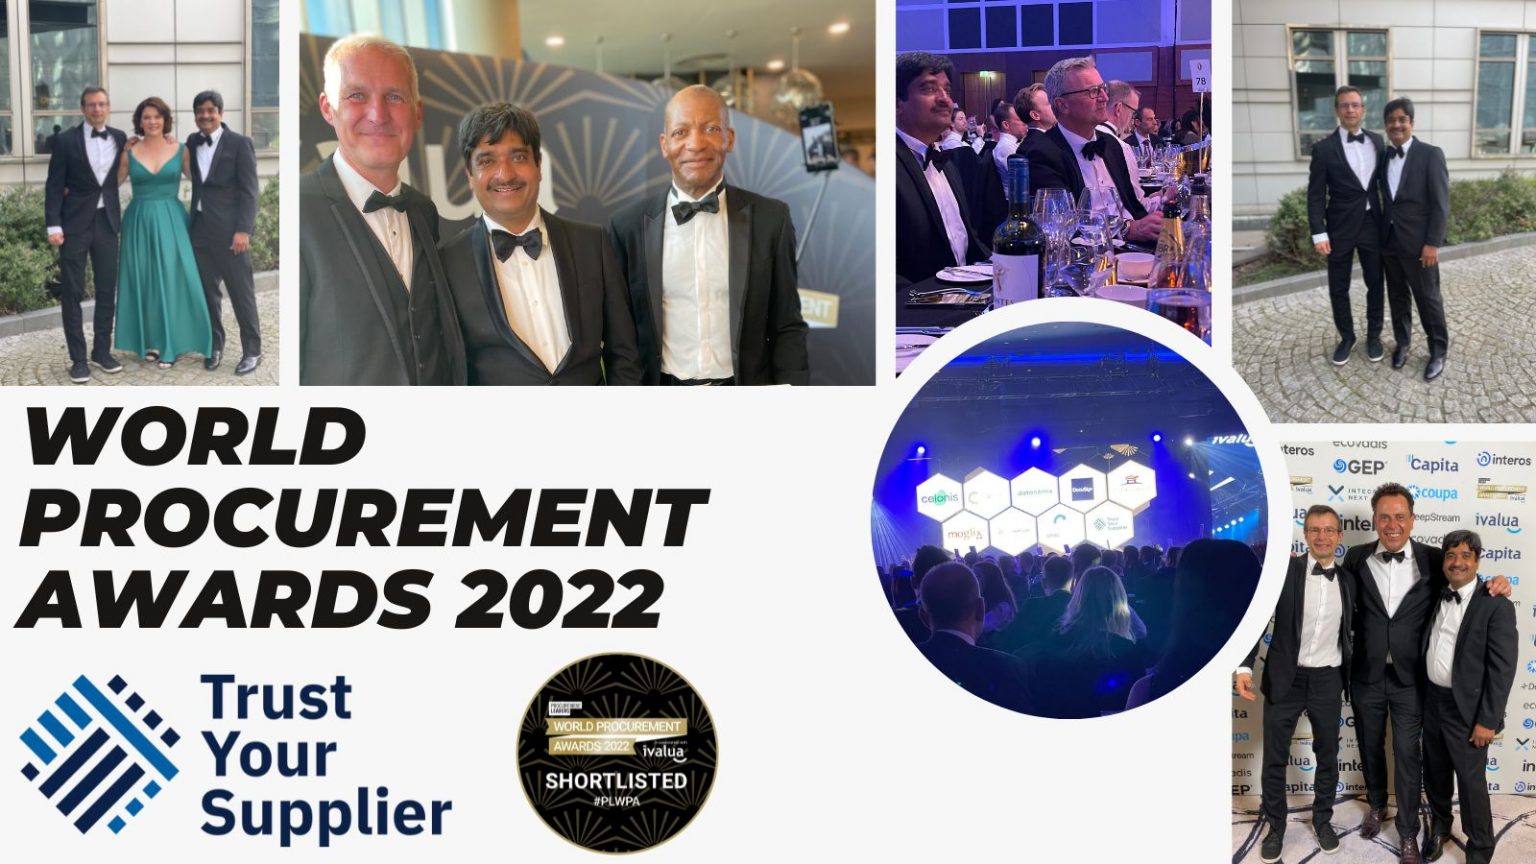 World Procurement Awards 2022 Trust Your Supplier